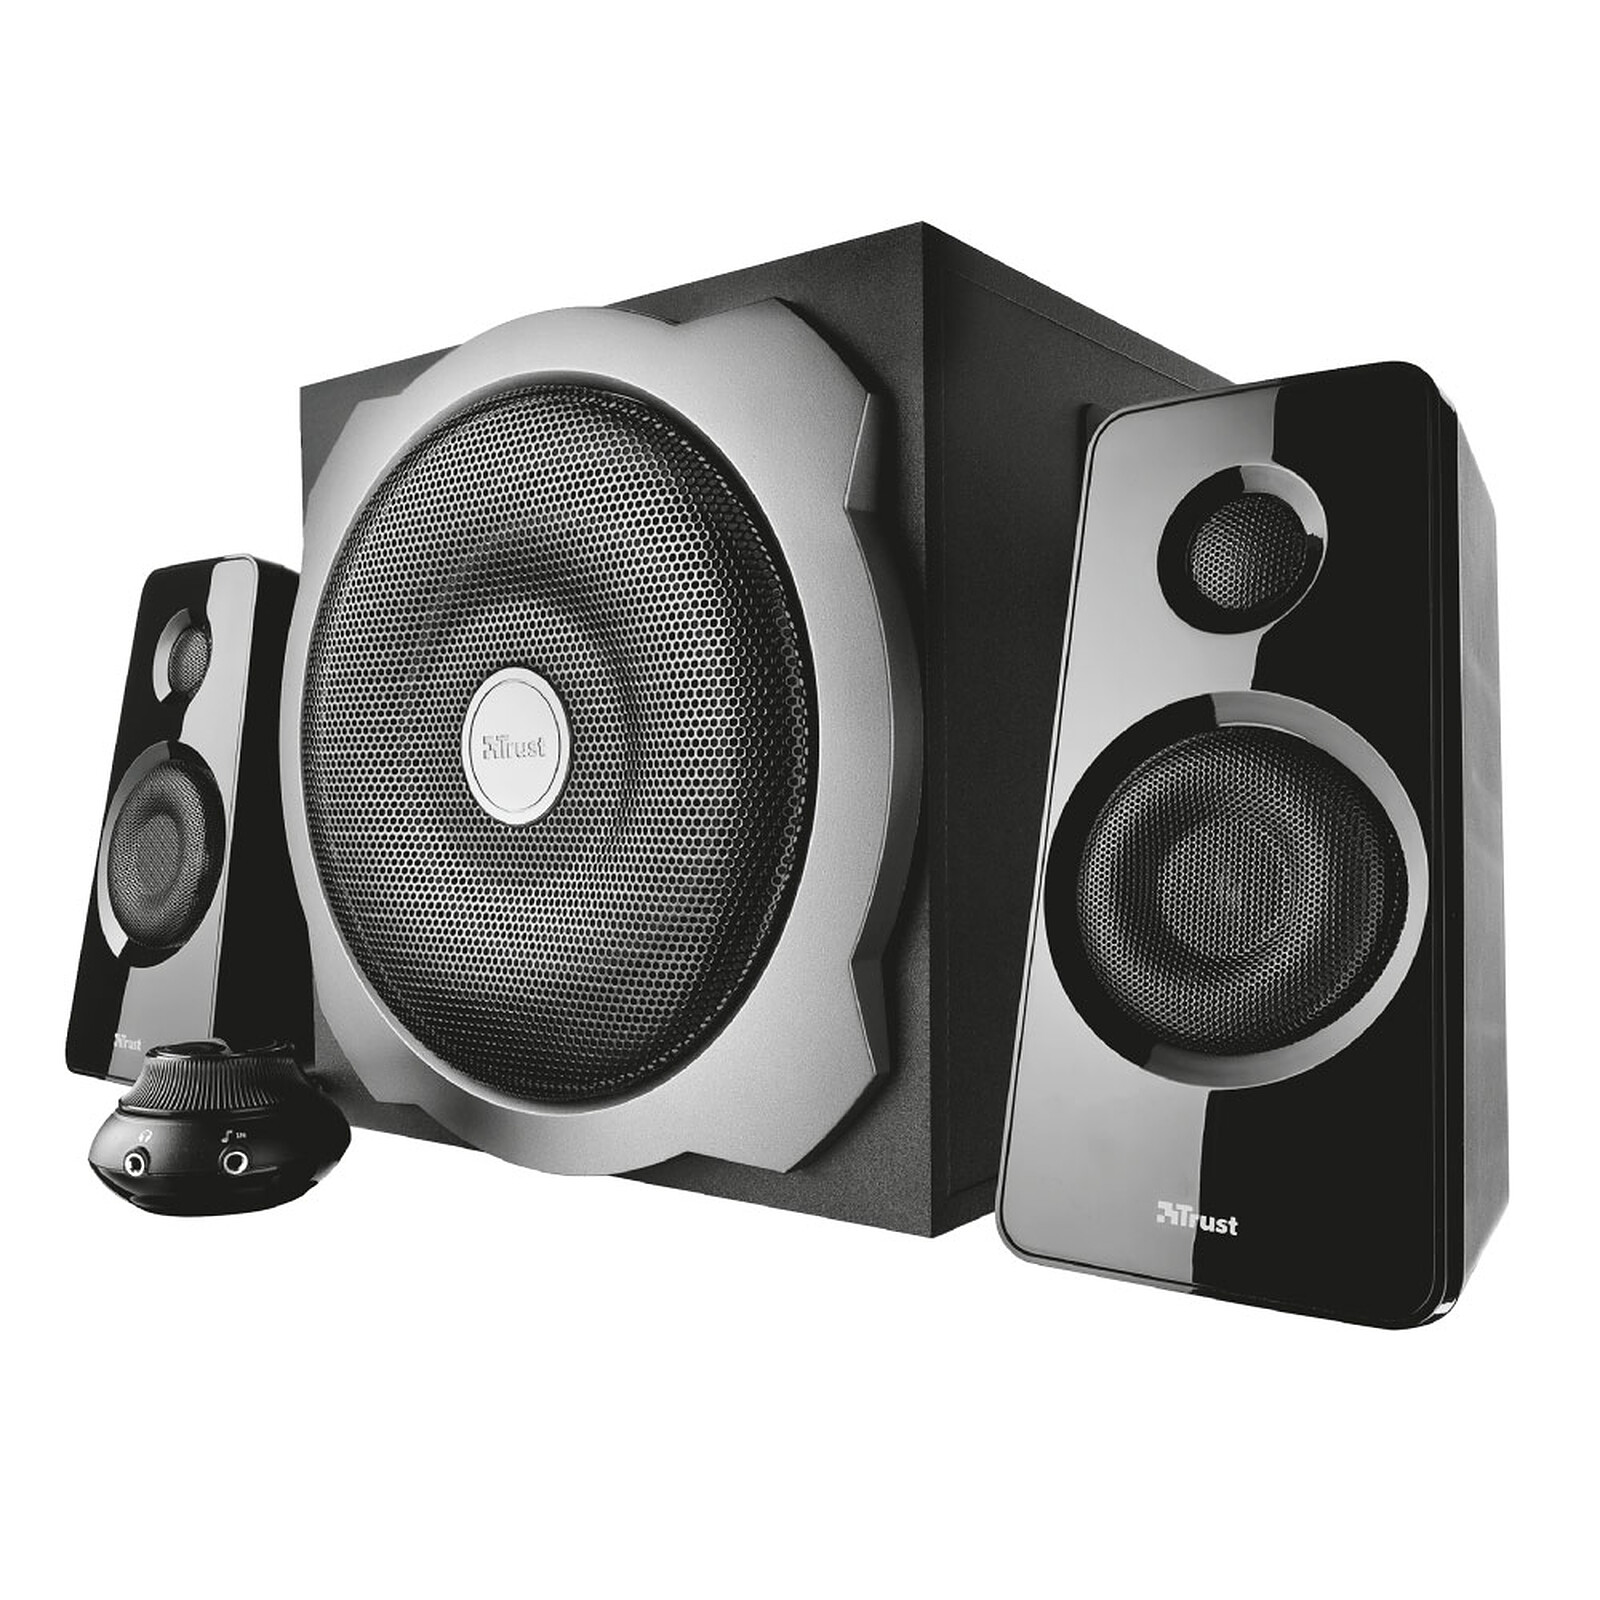 Logitech Speaker System Z623 - Enceinte PC - Garantie 3 ans LDLC